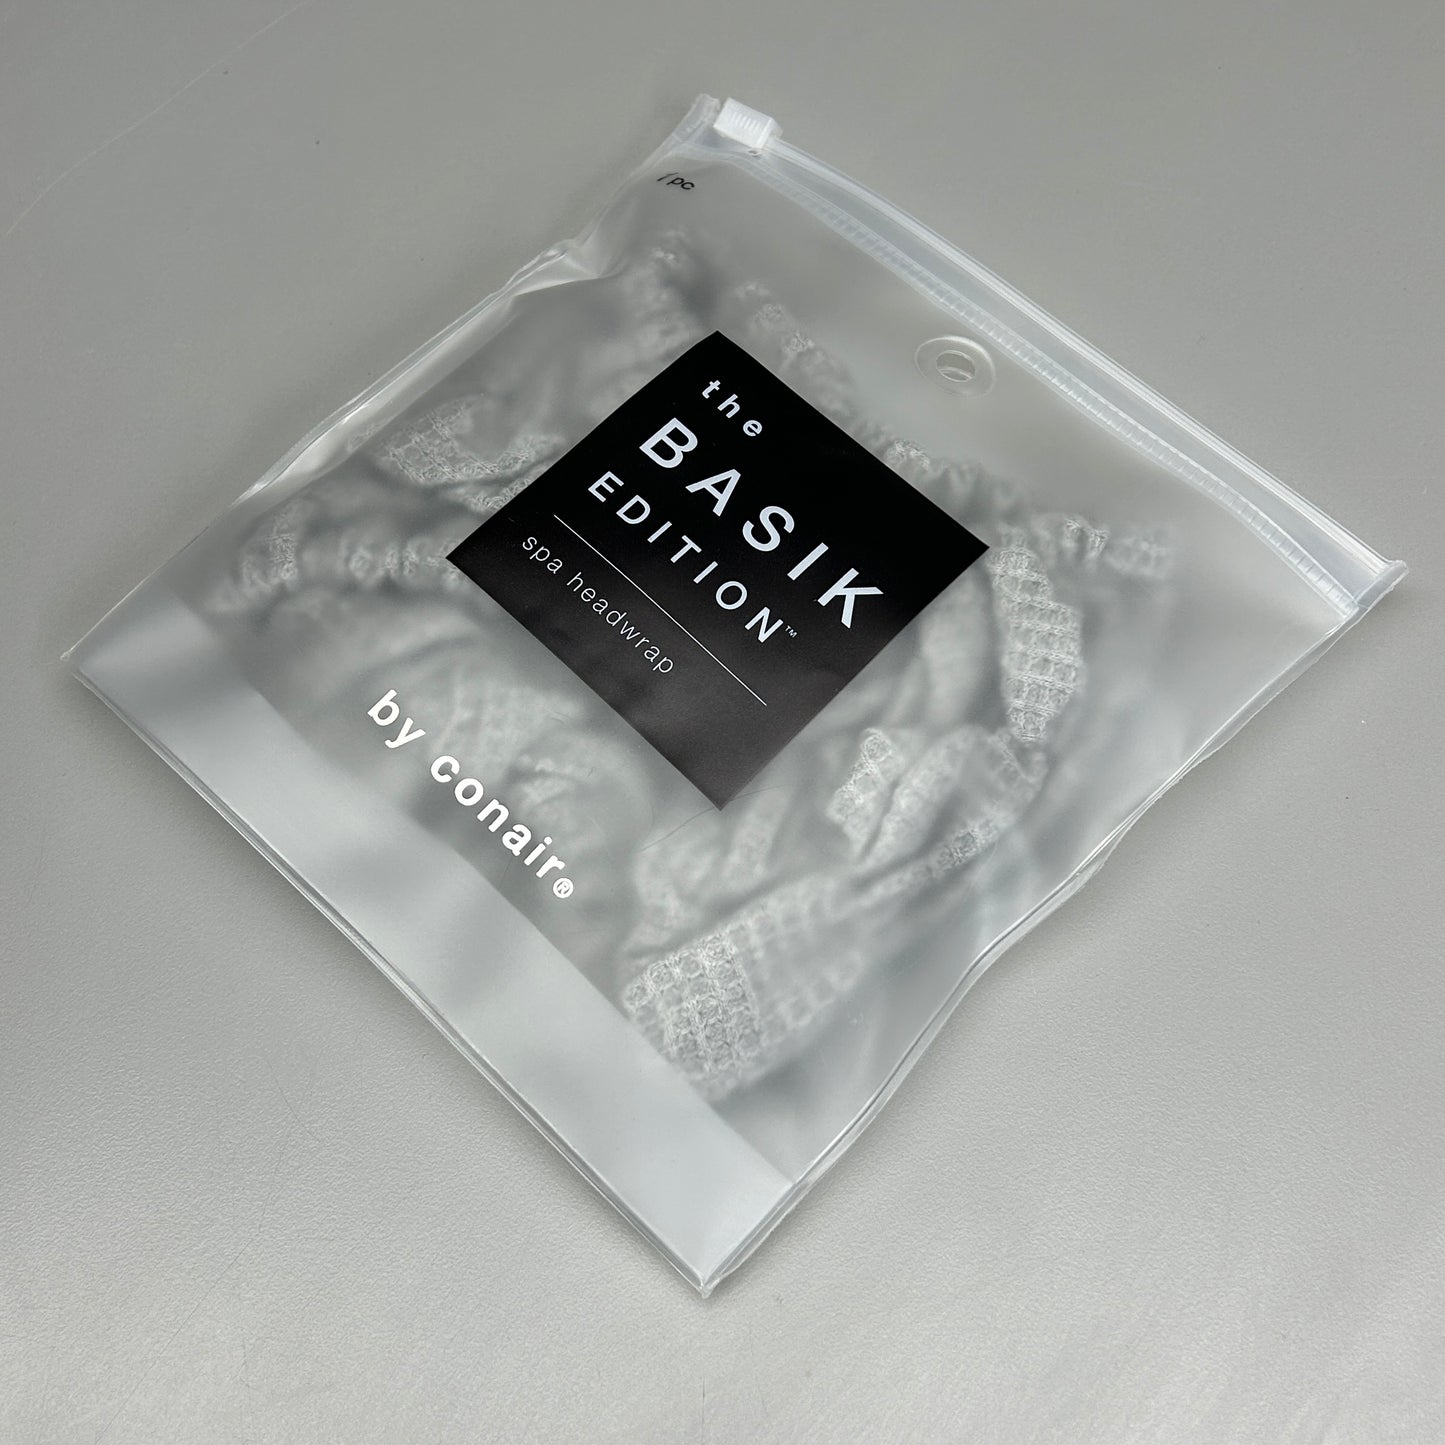 CONAIR 3-PACK! The Basik Edition Spa Headwrap Grey (New)